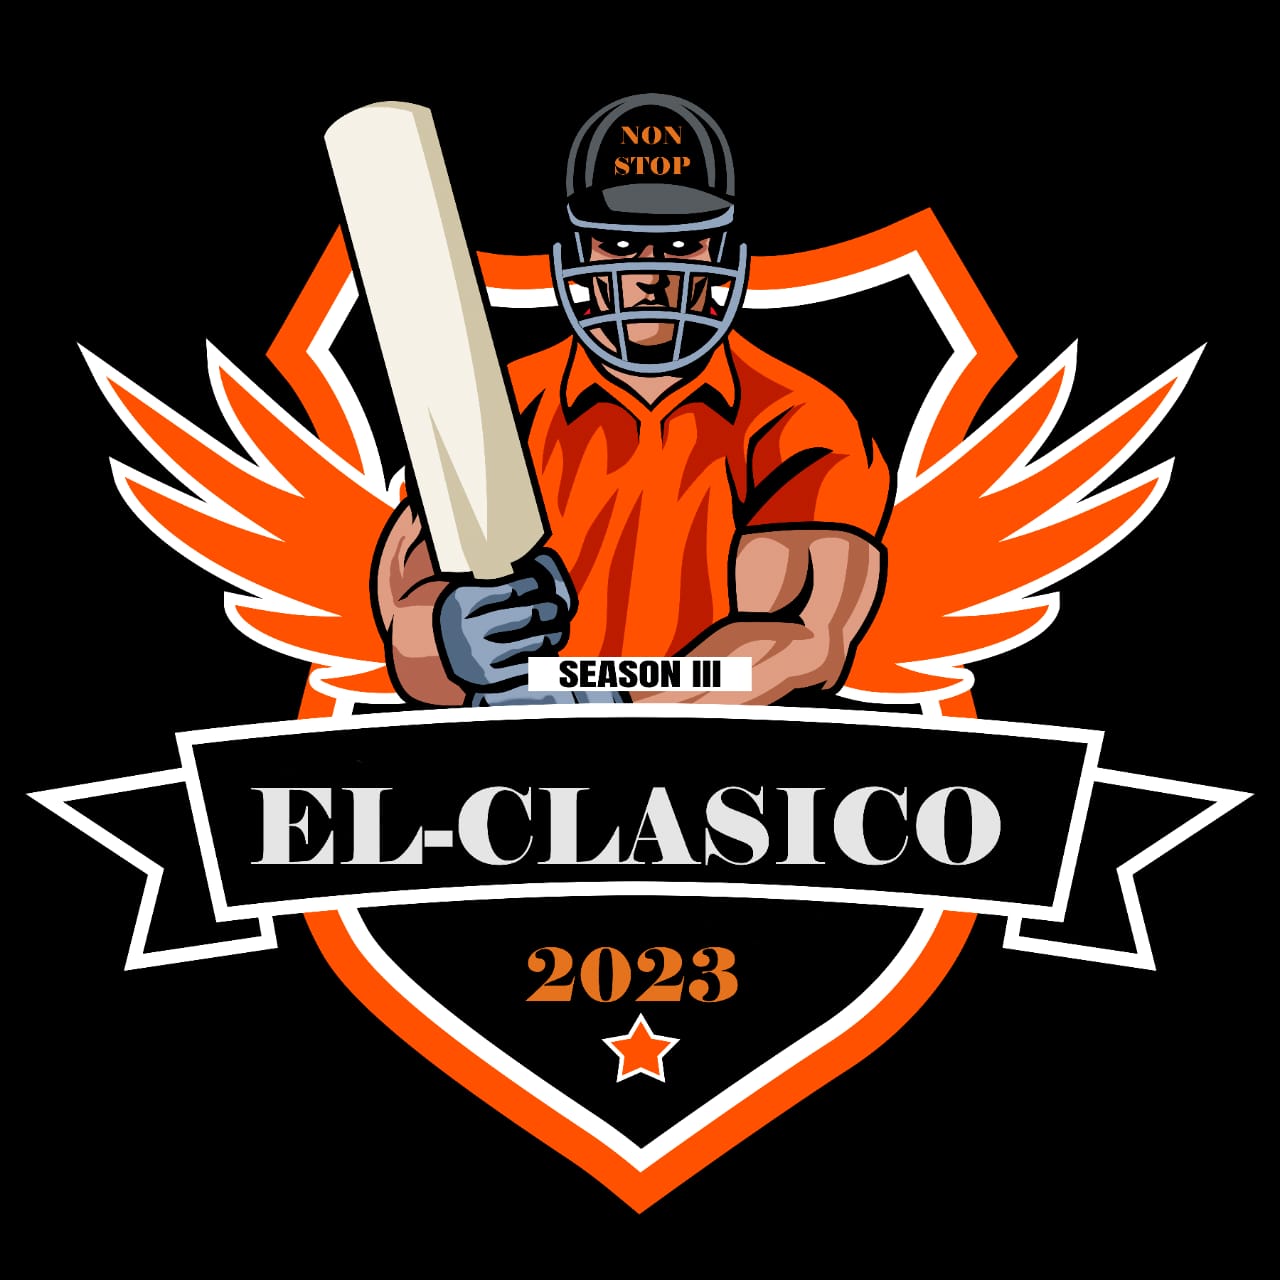 NON-STOP ELCLASICO TOURNAMENT 2023